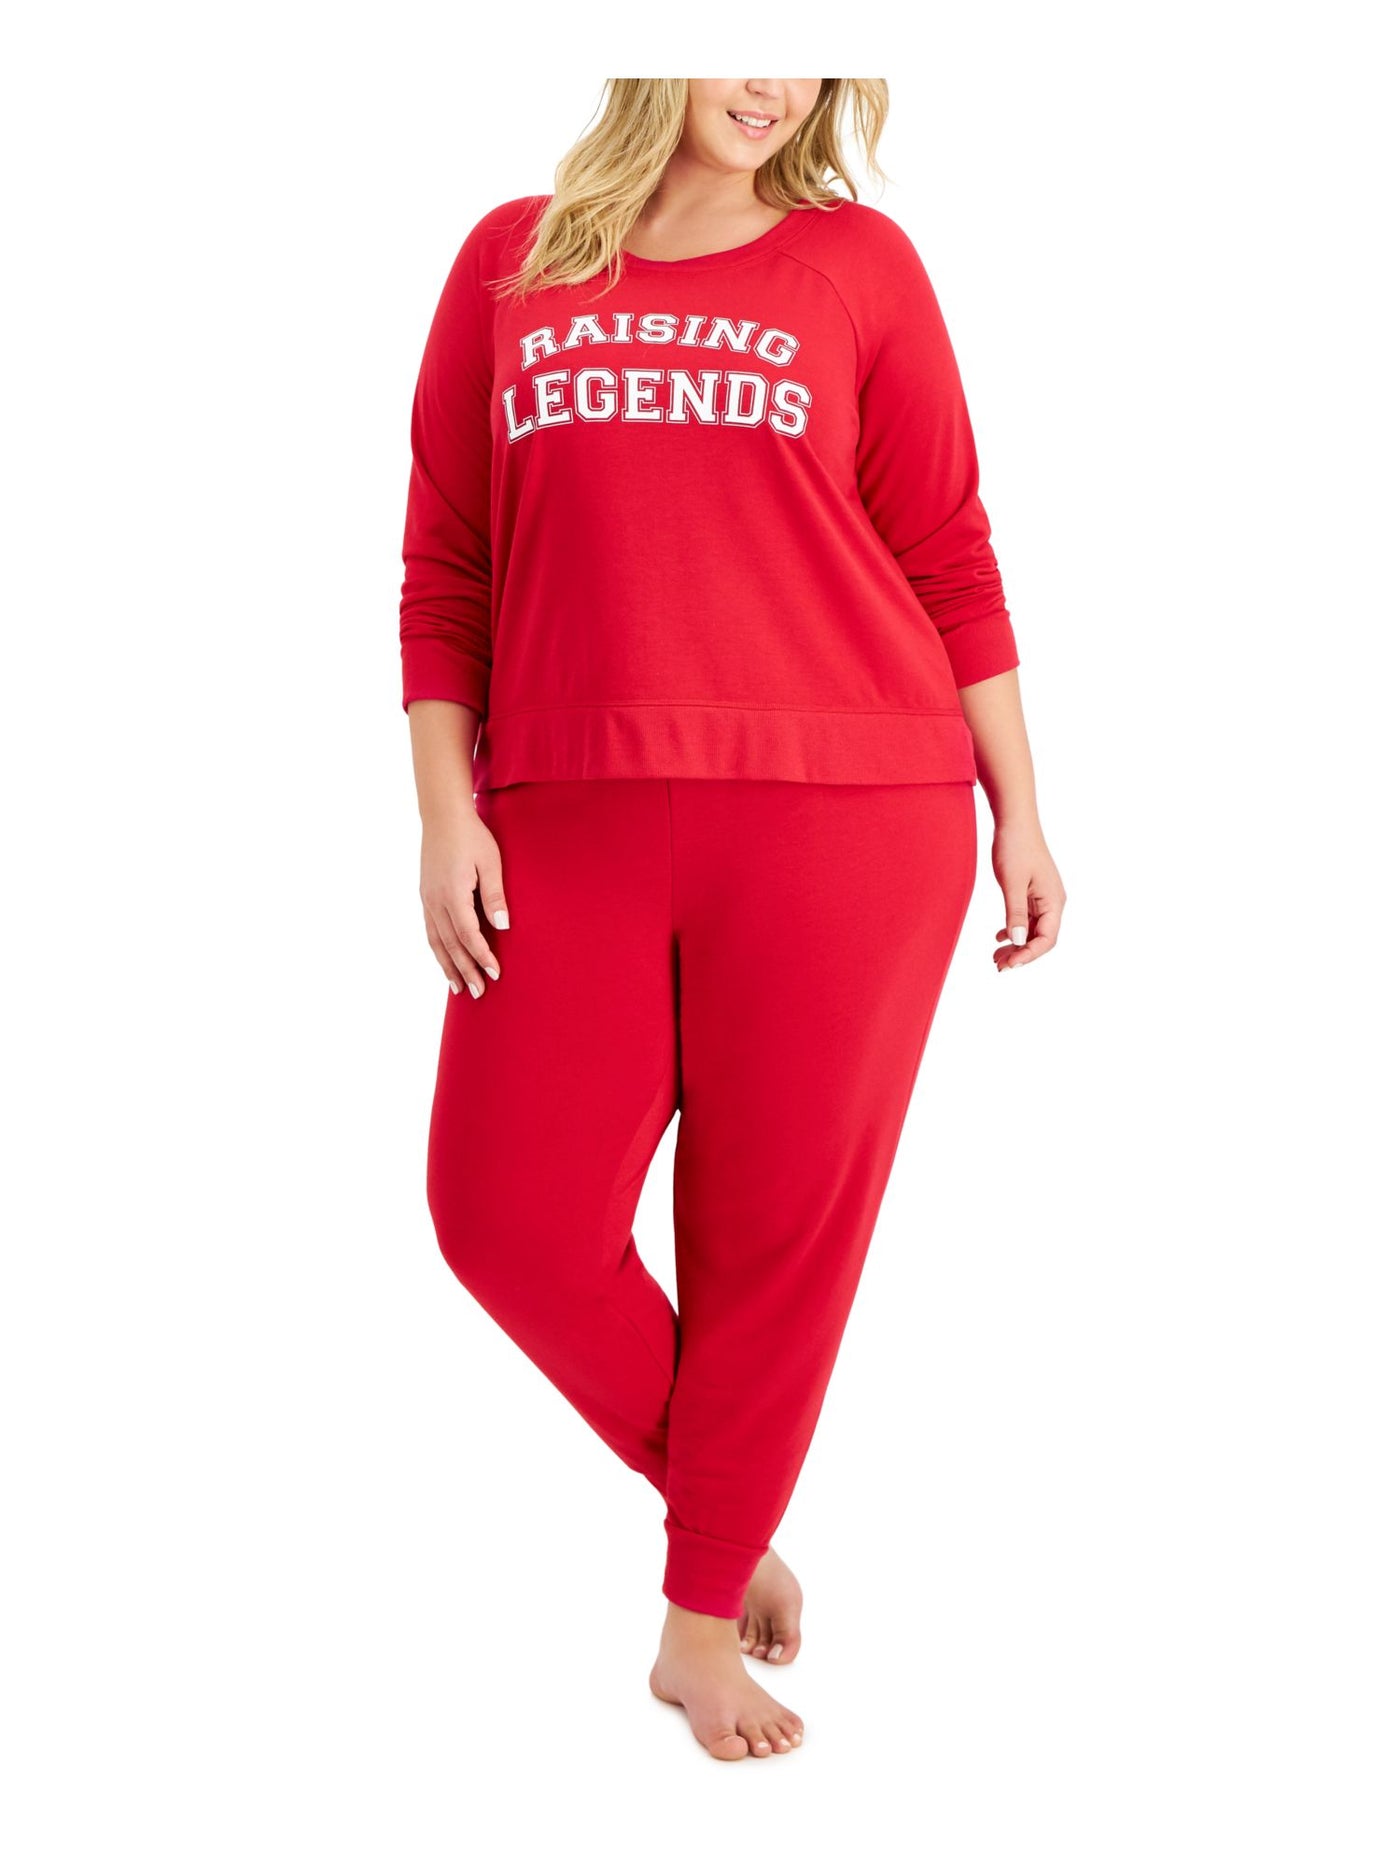 FAMILY PJs Womens Raising Legends Red Printed Elastic Band T-Shirt Top Cuffed Pants Pajamas Plus 1X